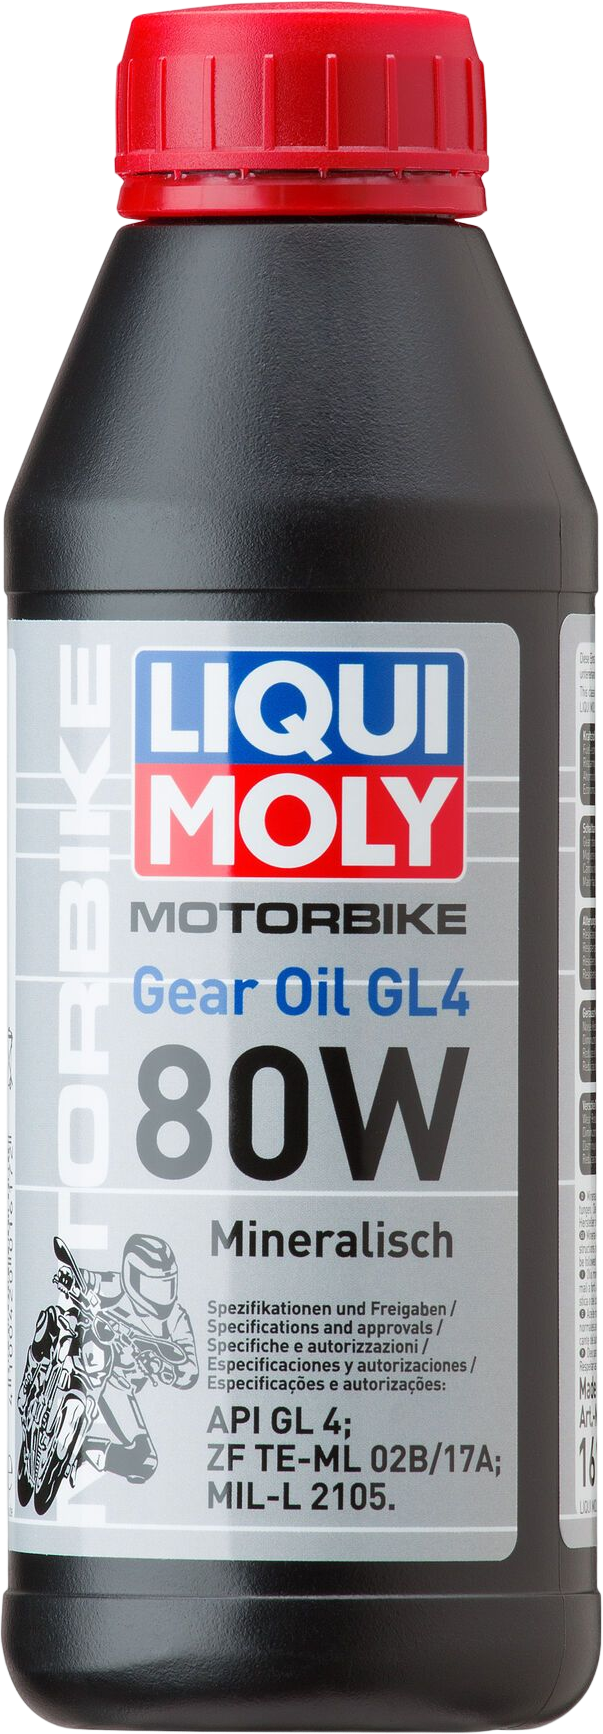 Liqui Moly Motorbike Transmissieolie (GL4) 80W, 6 x 500 ml detail 2